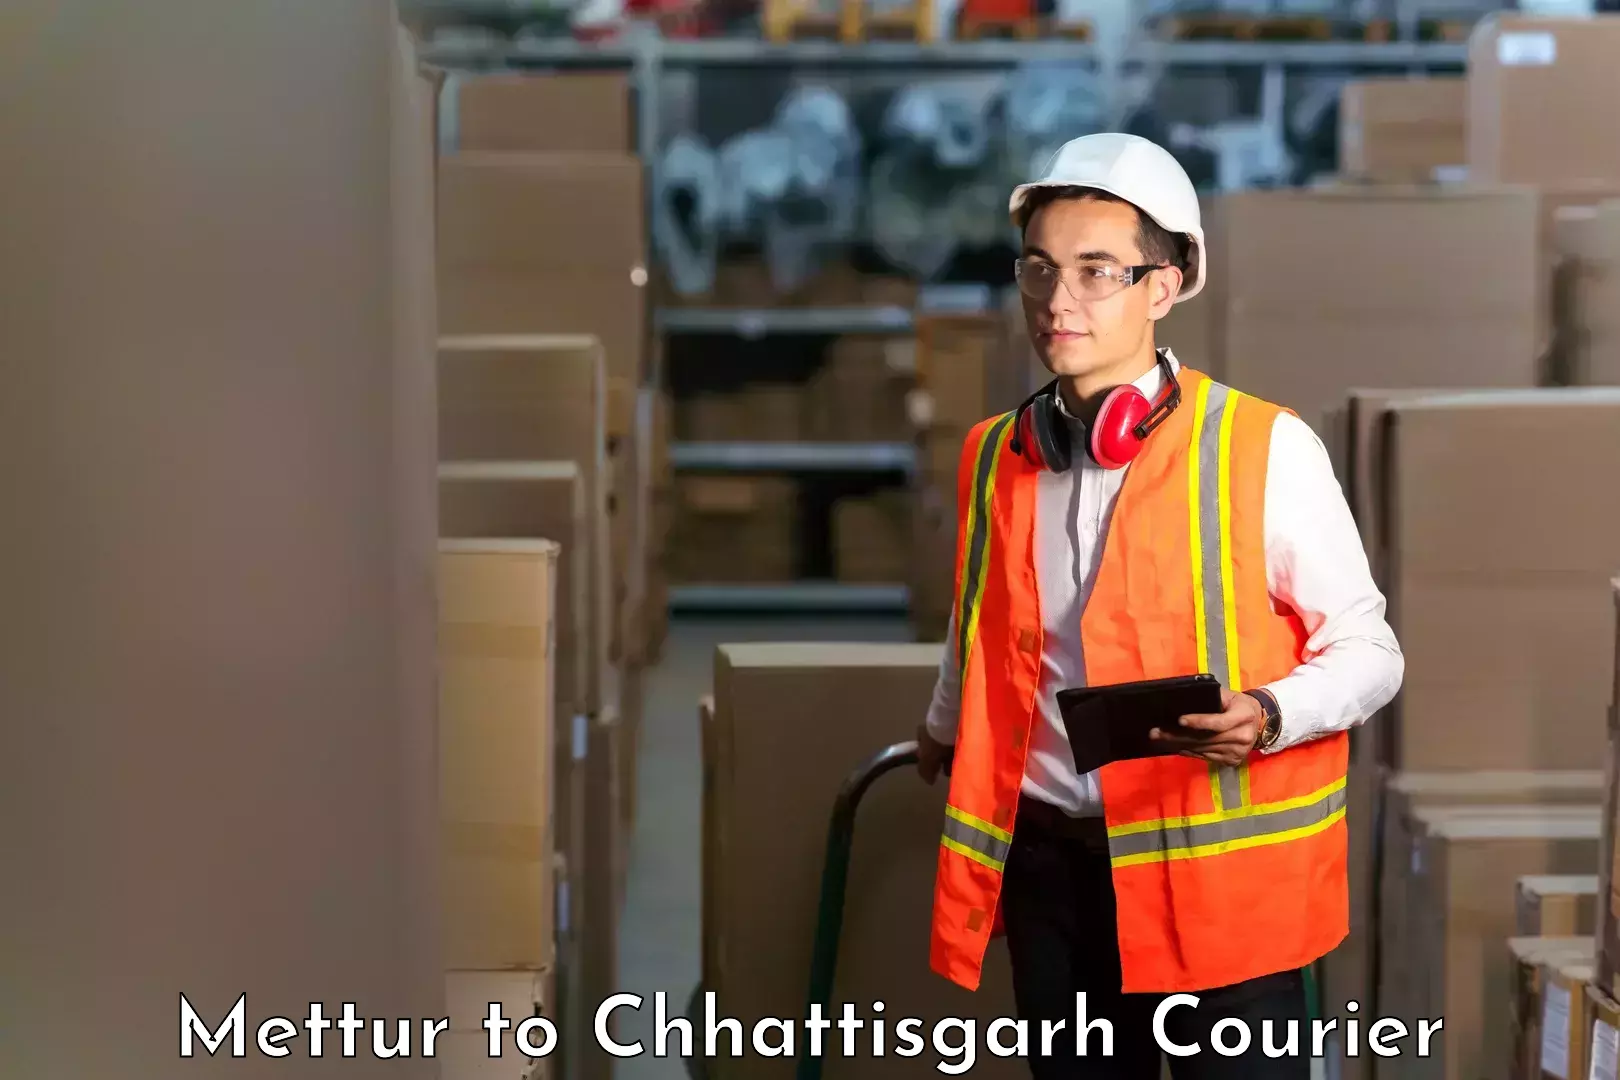 Sustainable delivery practices Mettur to Bijapur Chhattisgarh